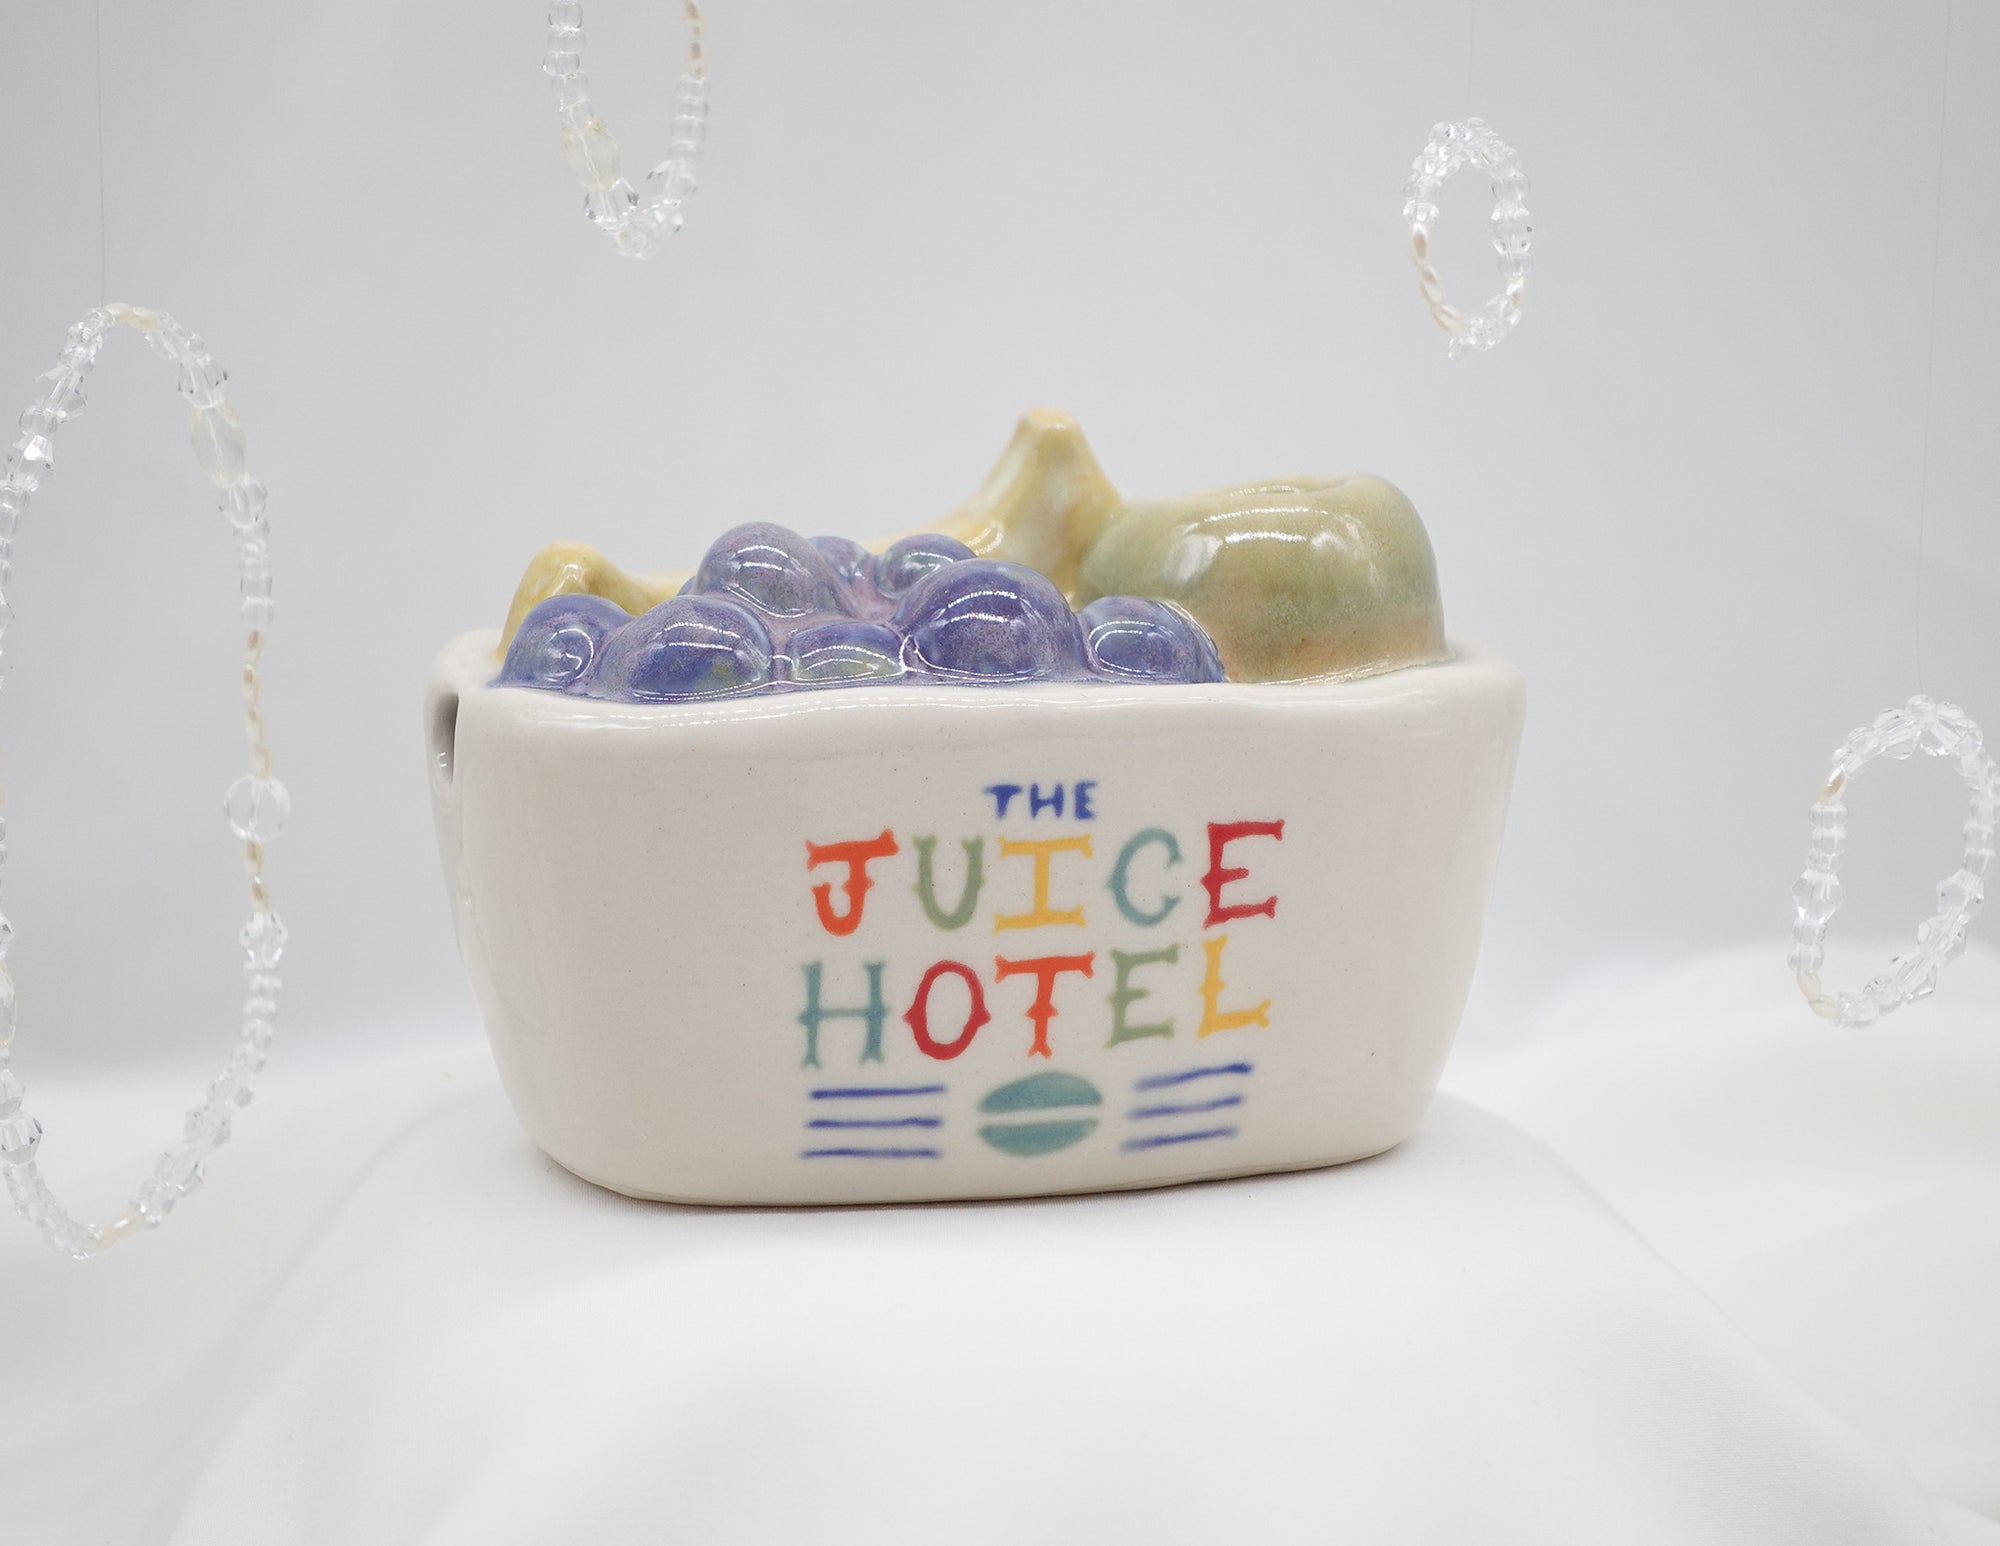 The Juice Hotel Fruit Bowl